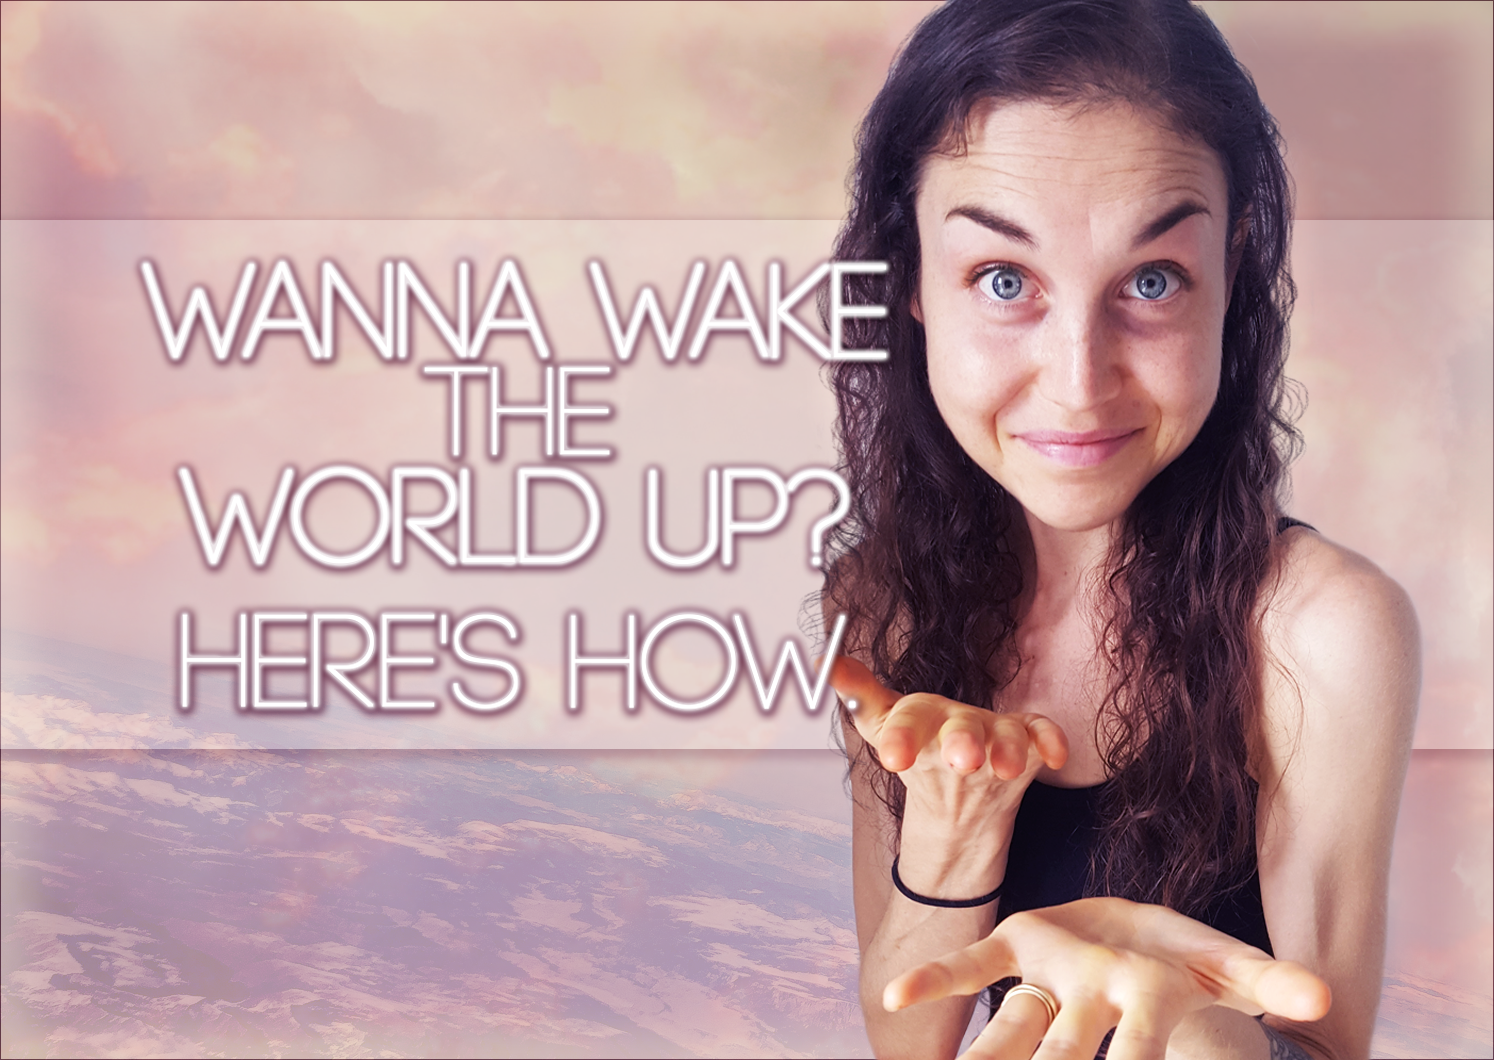 Wanna Wake The World Up? Here’s How